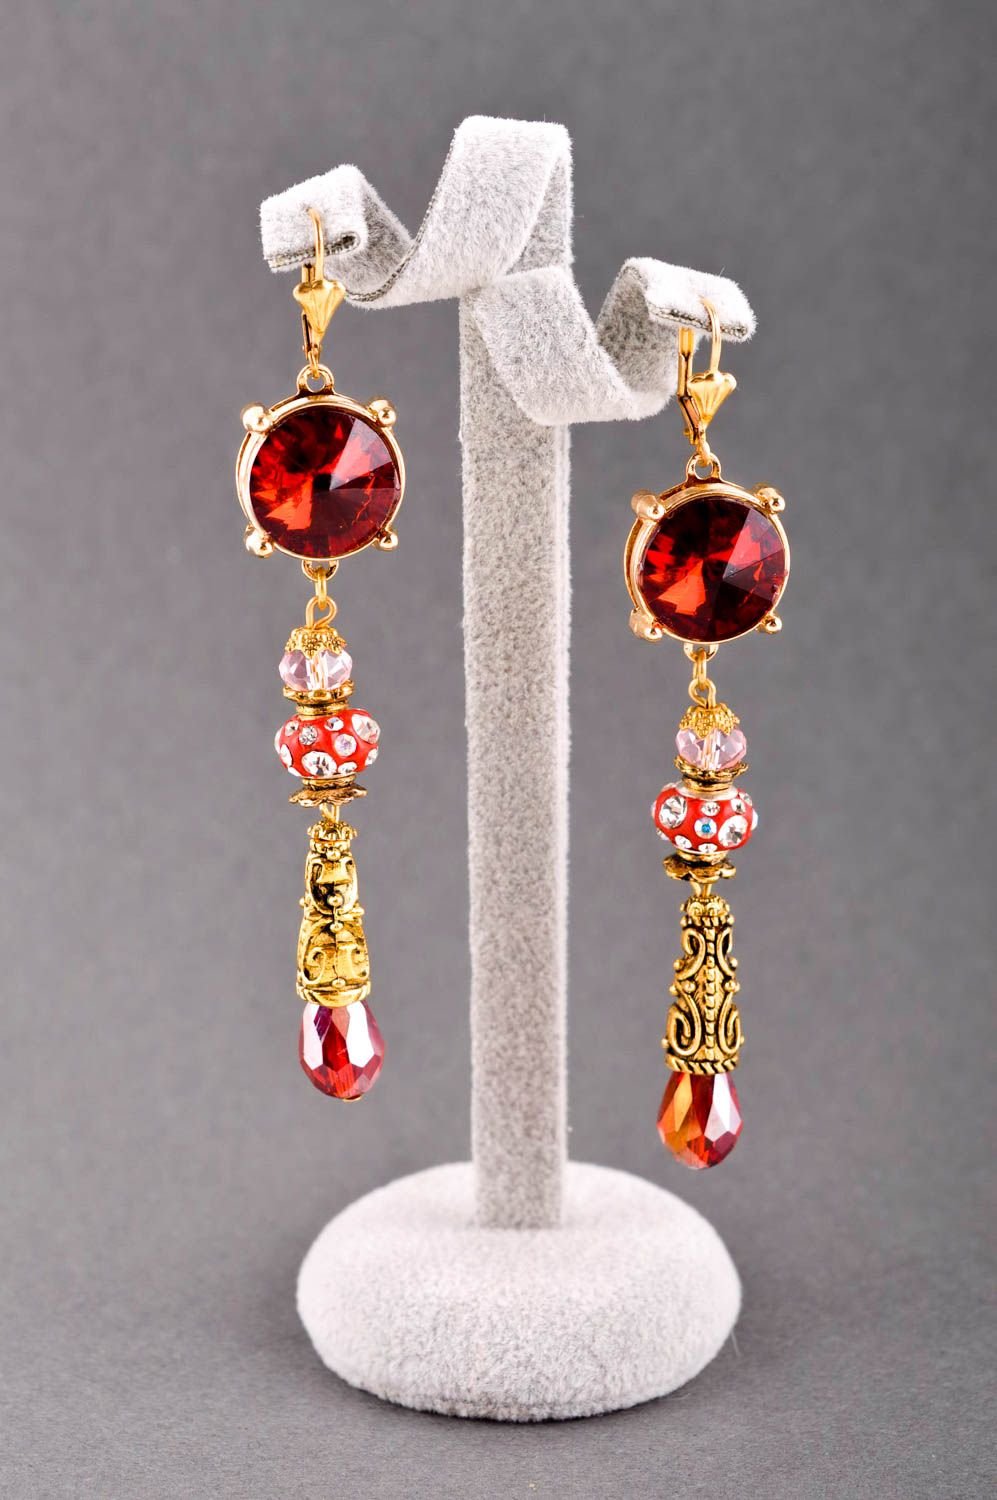 Handmade earrings designer earrings with charms unusual gift for girls photo 1